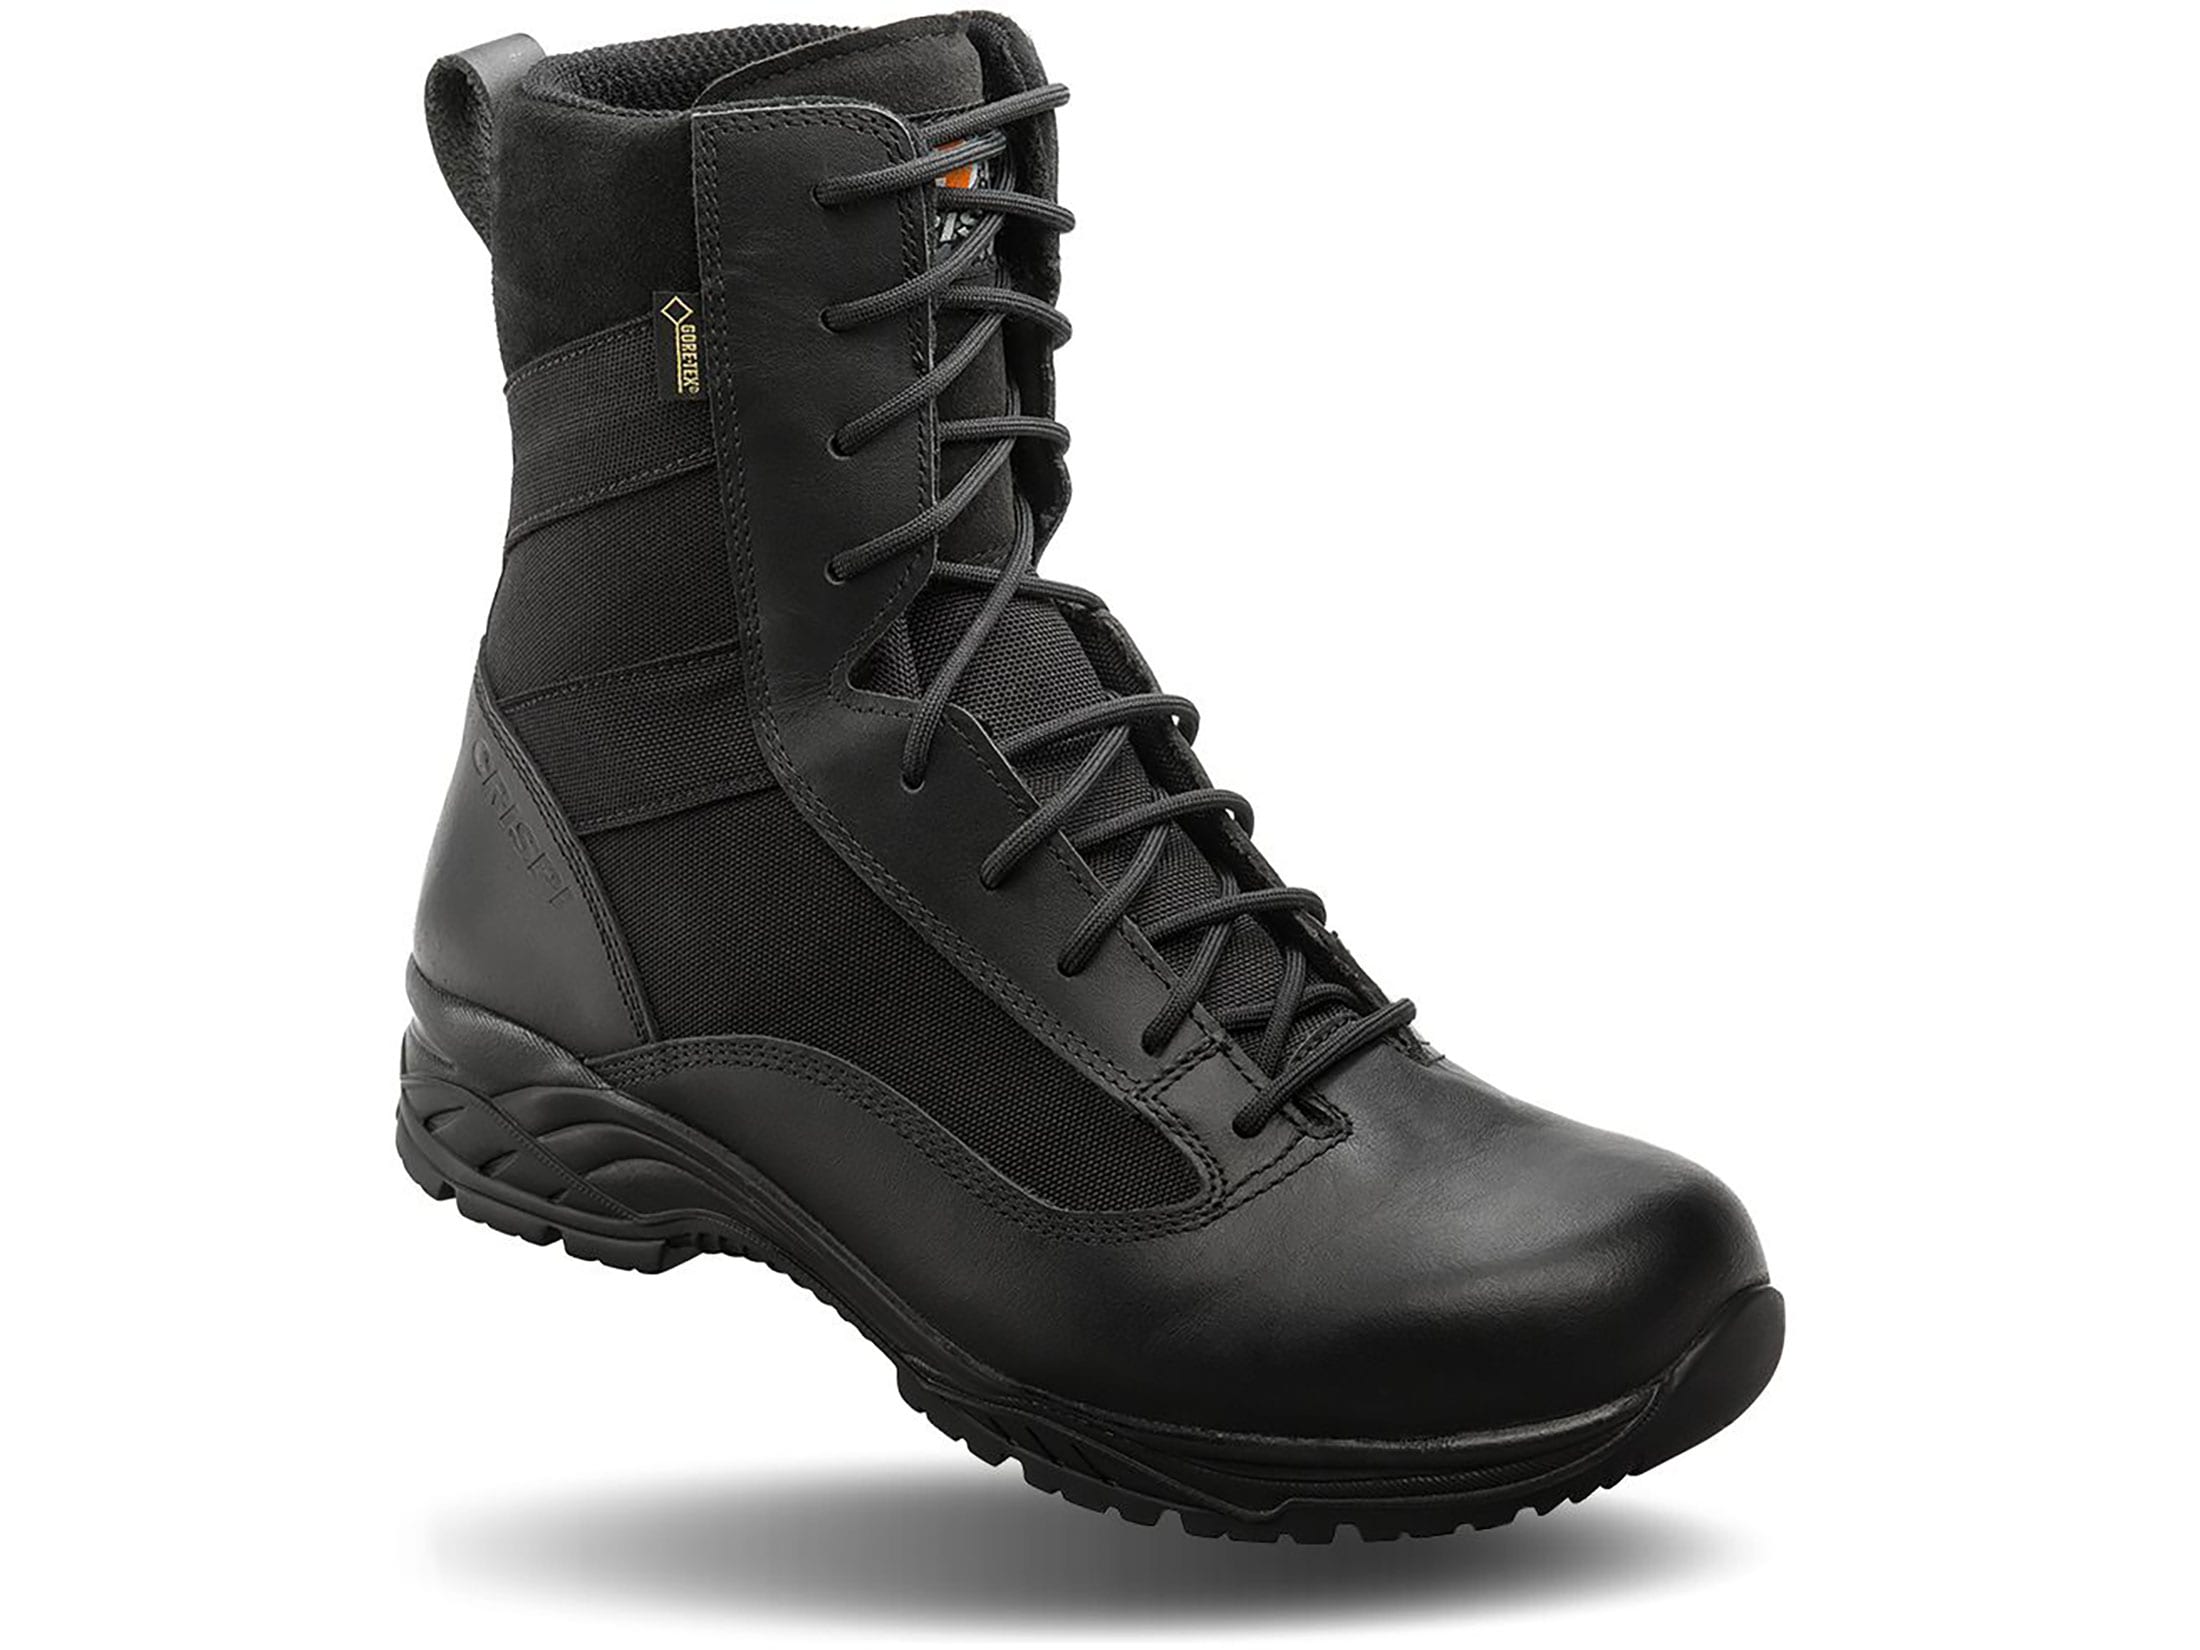 Opened Package Crispi Sniper GTX 10 Tactical Boots Leather Black Men's